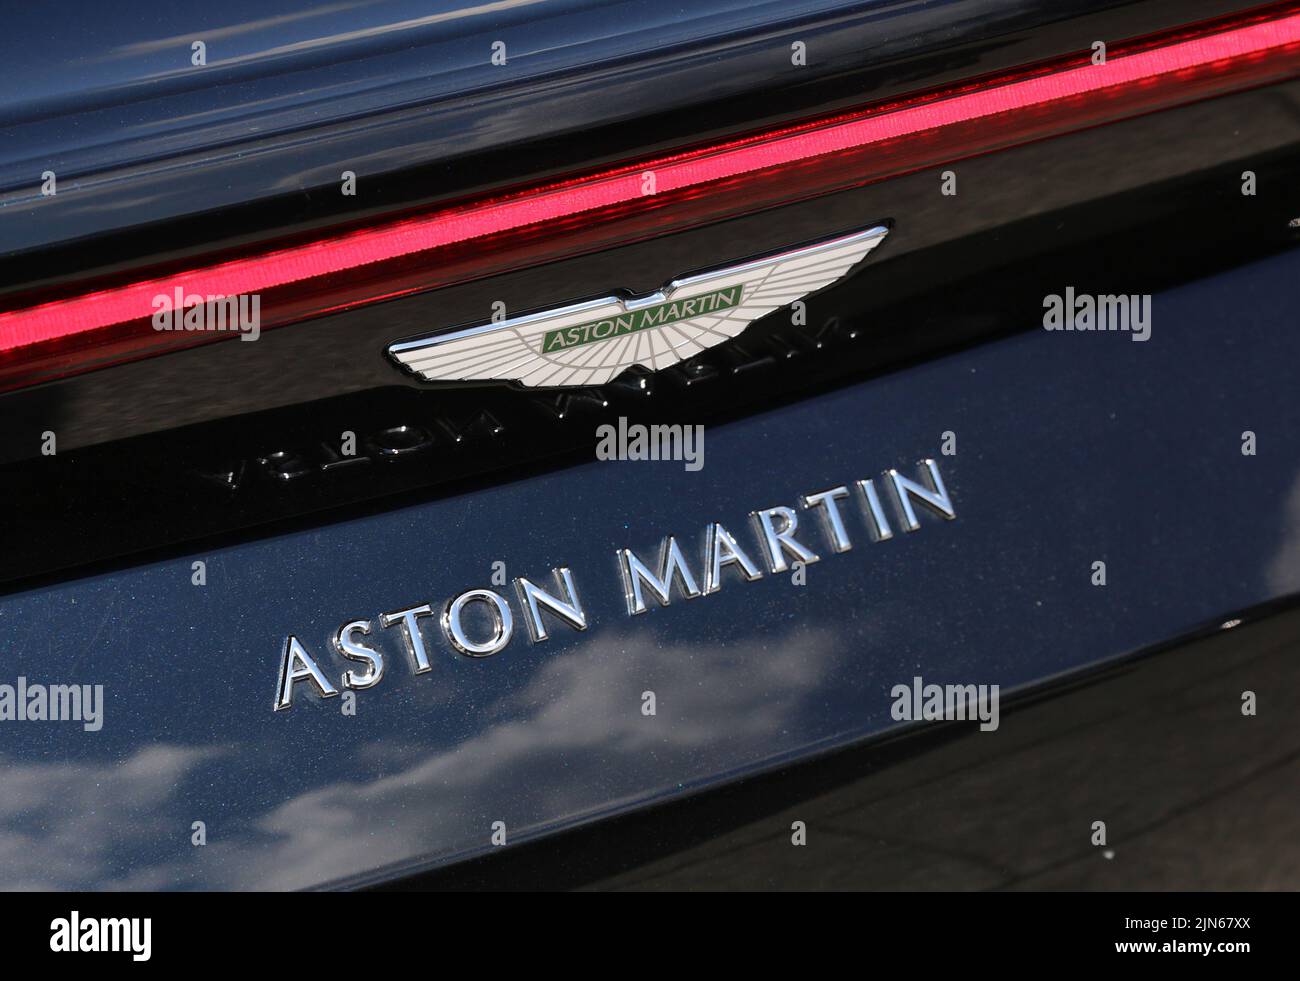 Cracow. Krakow. Poland. Aston Martin badge logo on the rear of the car. Stock Photo